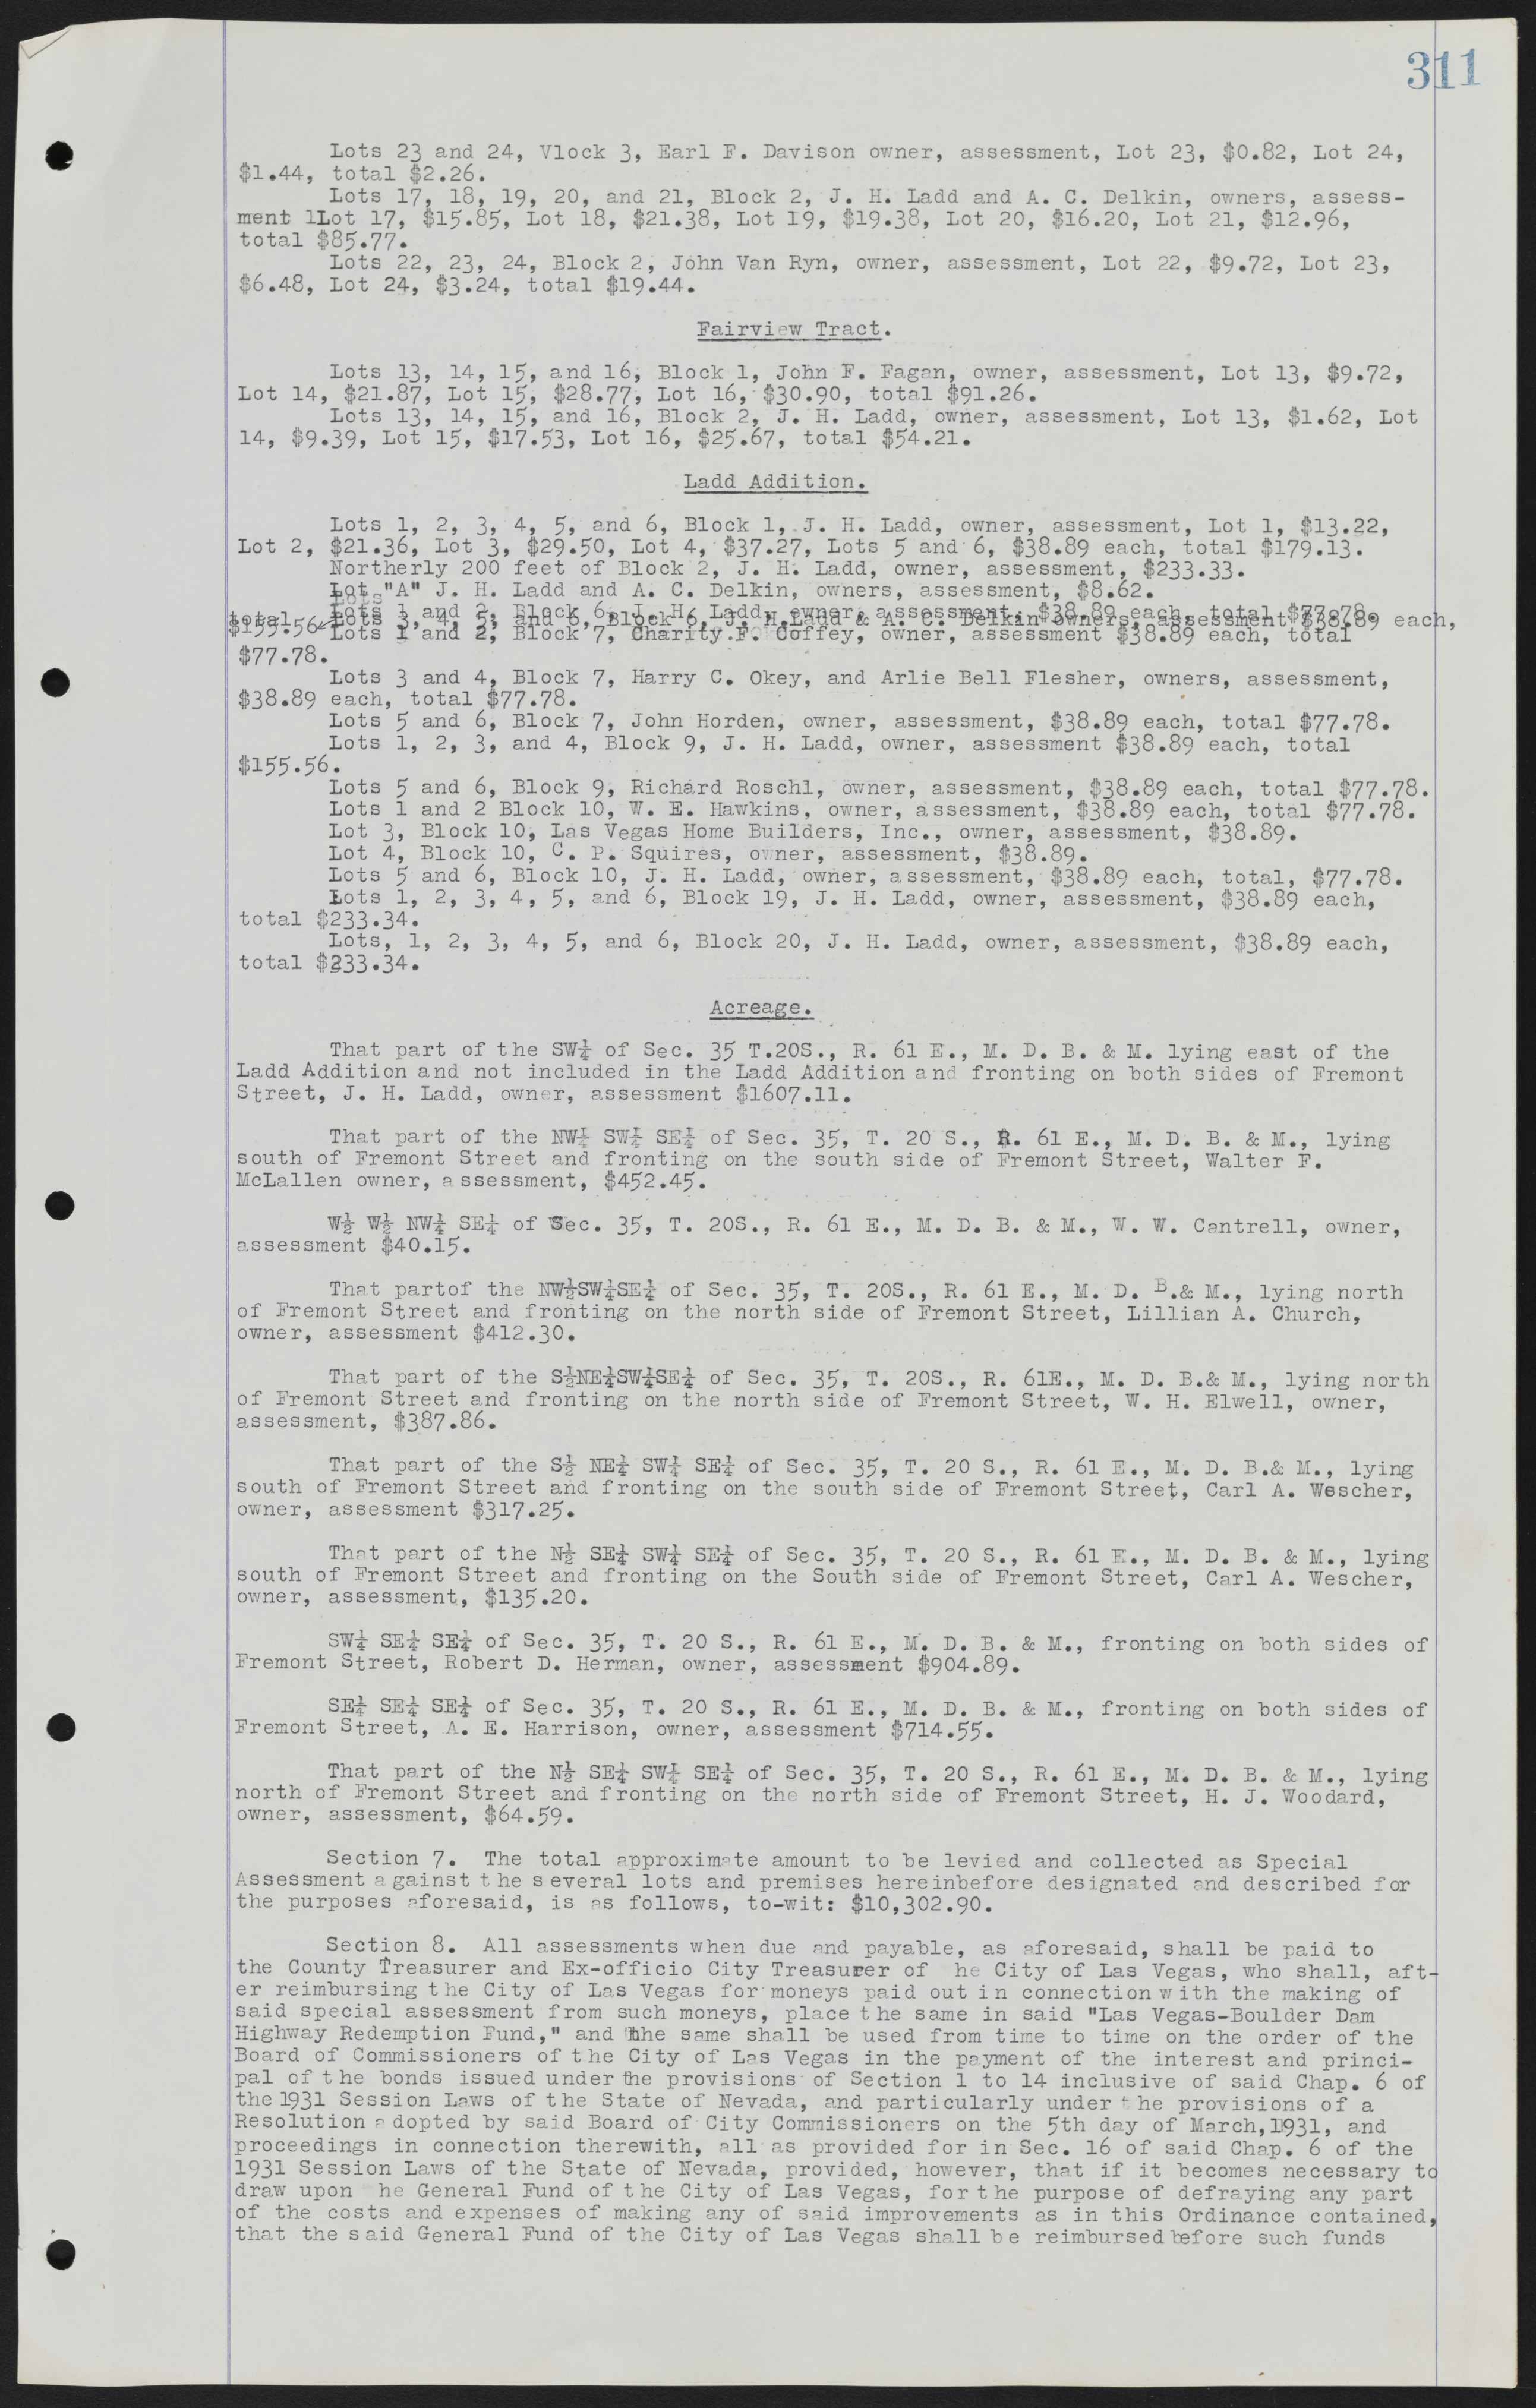 Las Vegas City Ordinances, July 18, 1911 to March 31, 1933, lvc000013-315